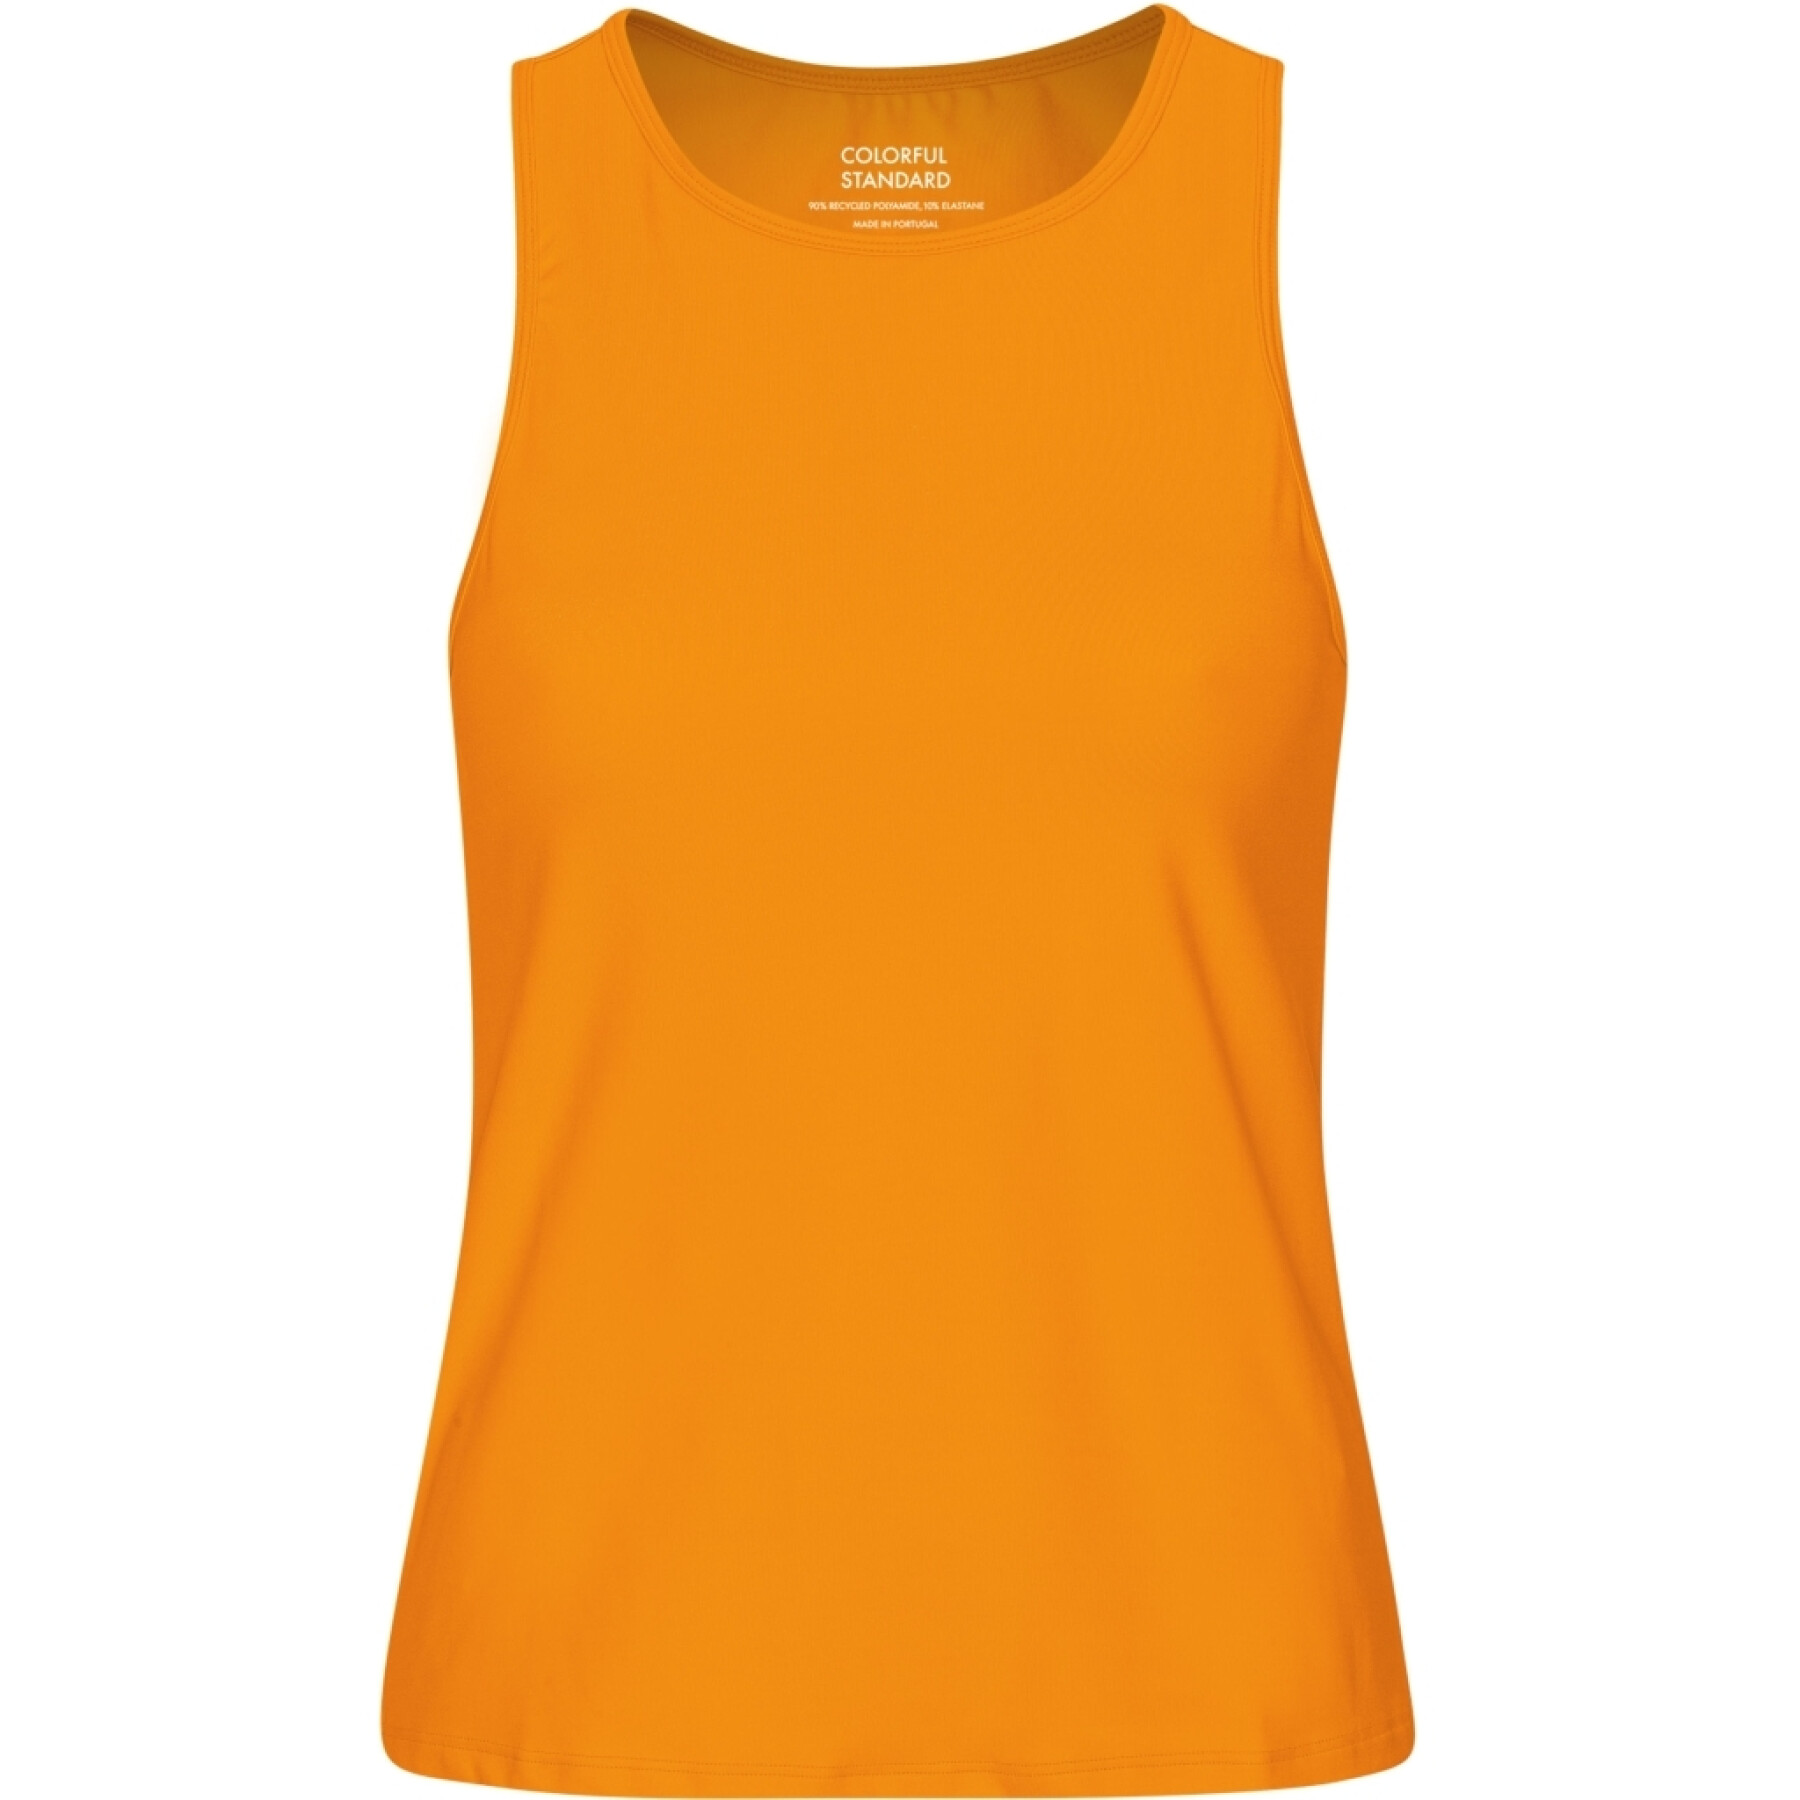 Women's tank top Colorful Standard Active Sunny Orange